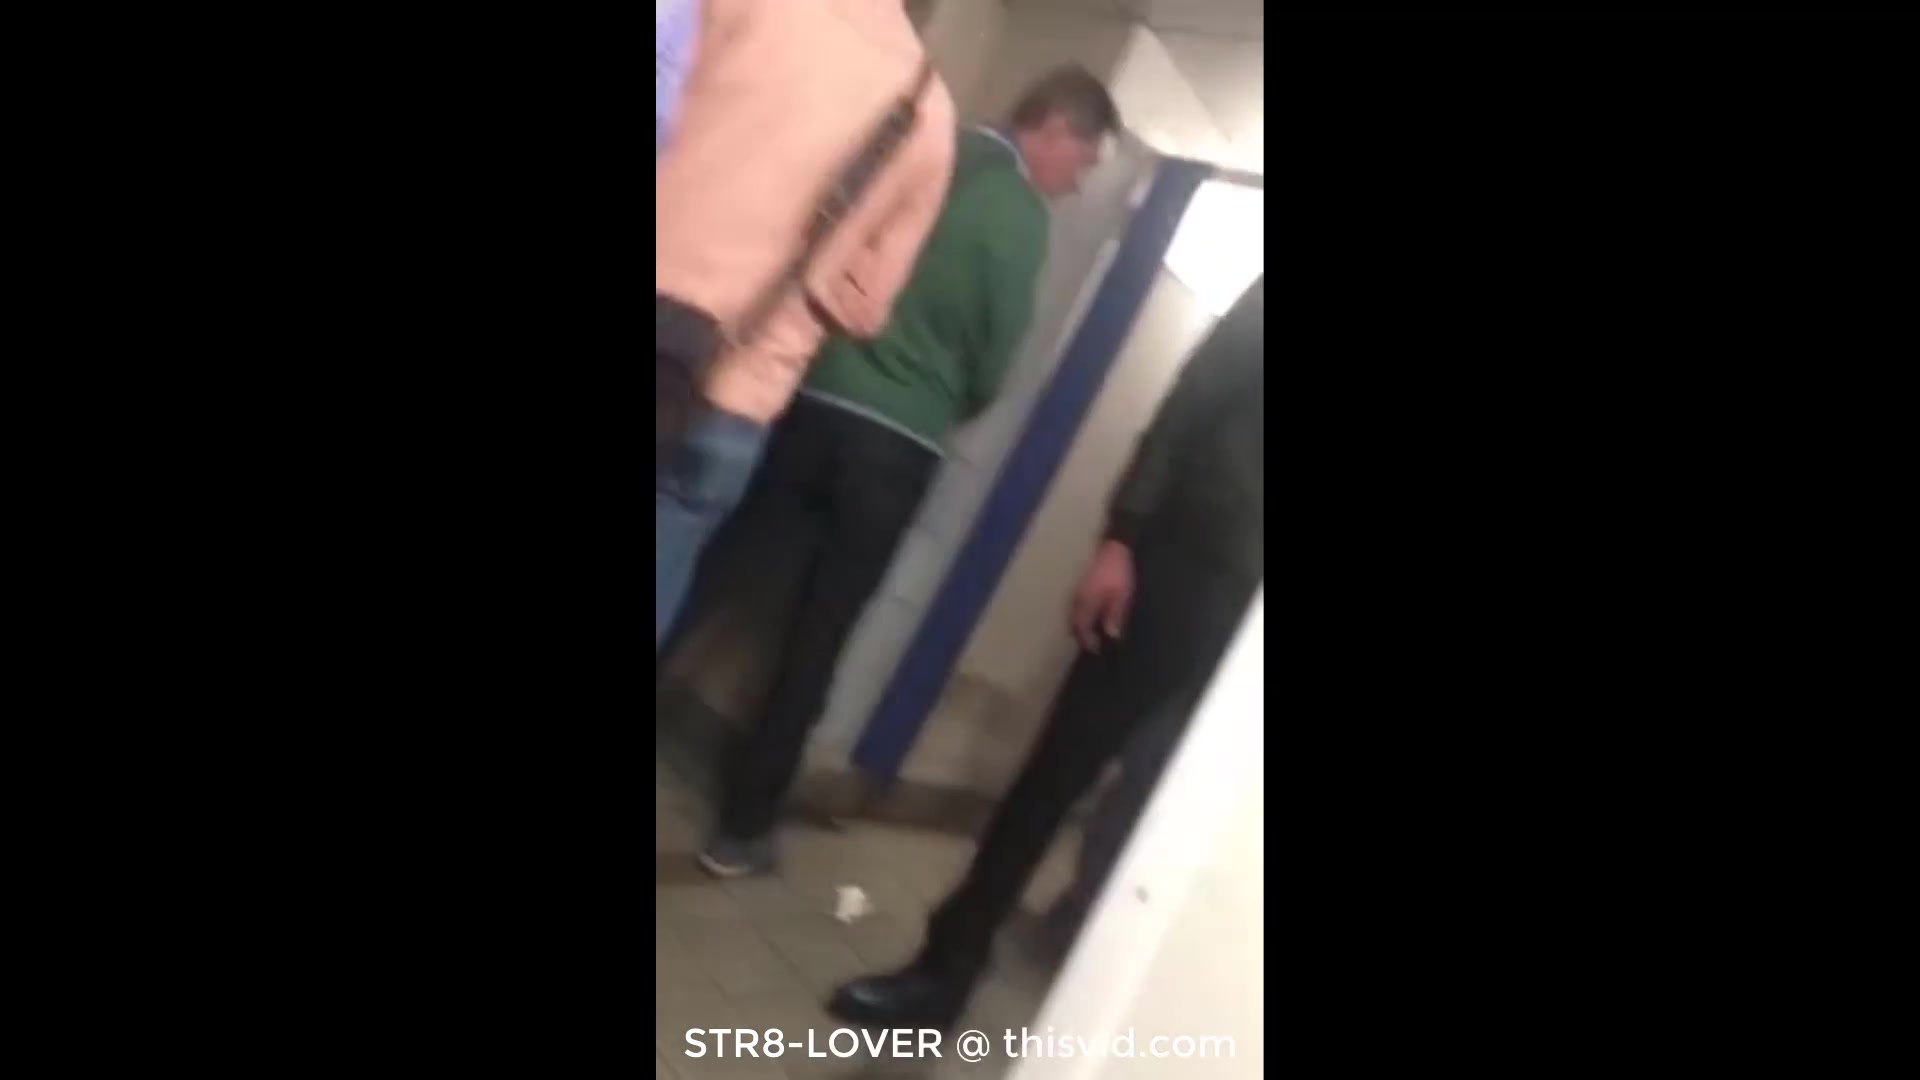 Spy cam cruises a bathroom full of gay guys